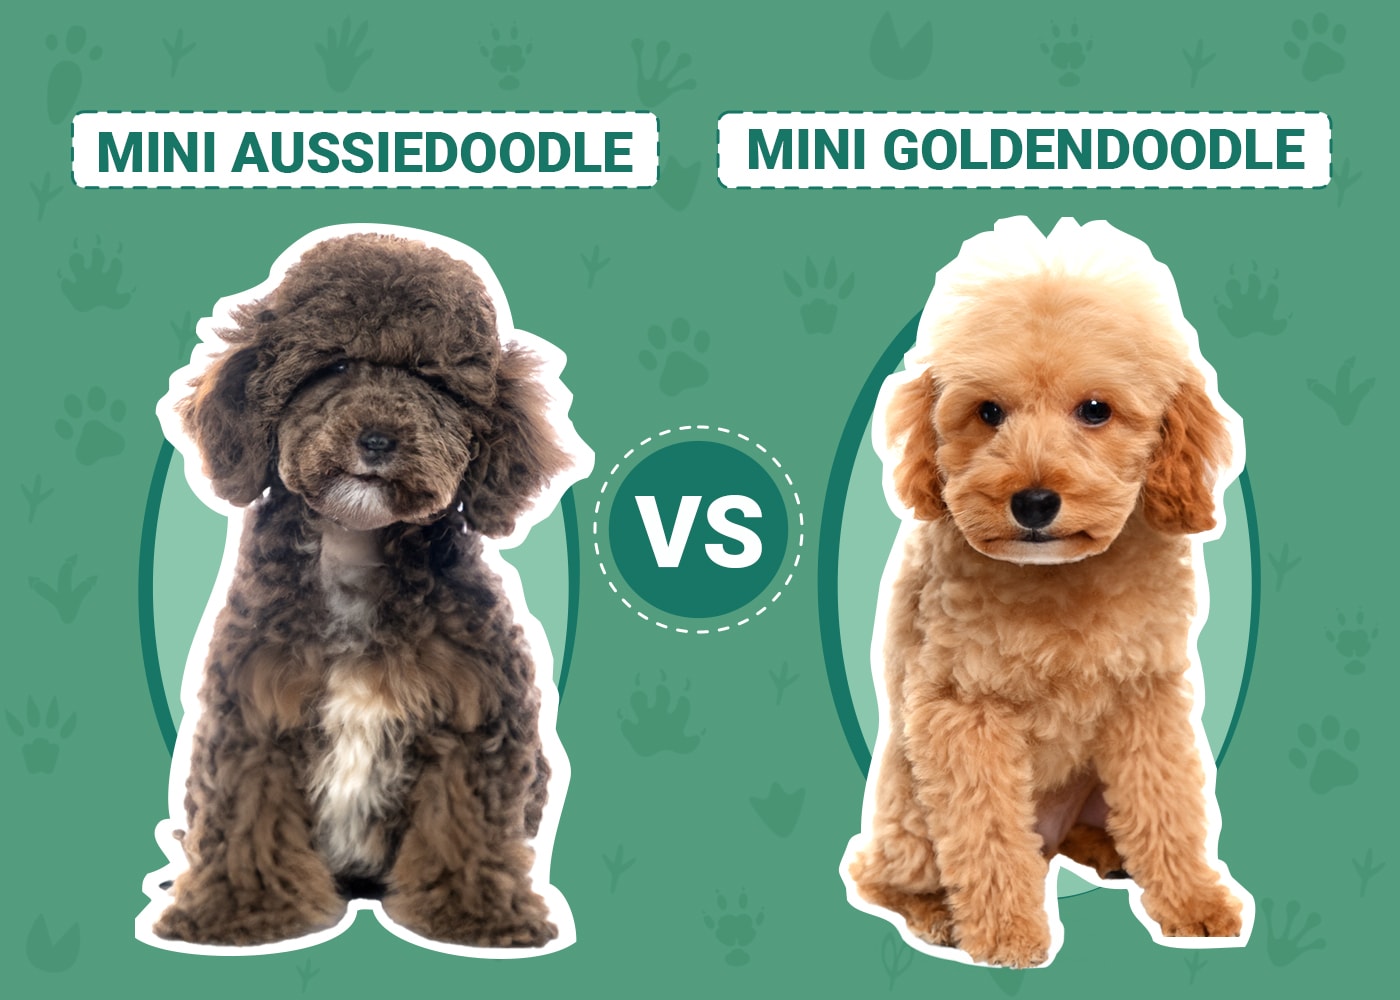 Mini Aussiedoodle vs Mini Goldendoodle